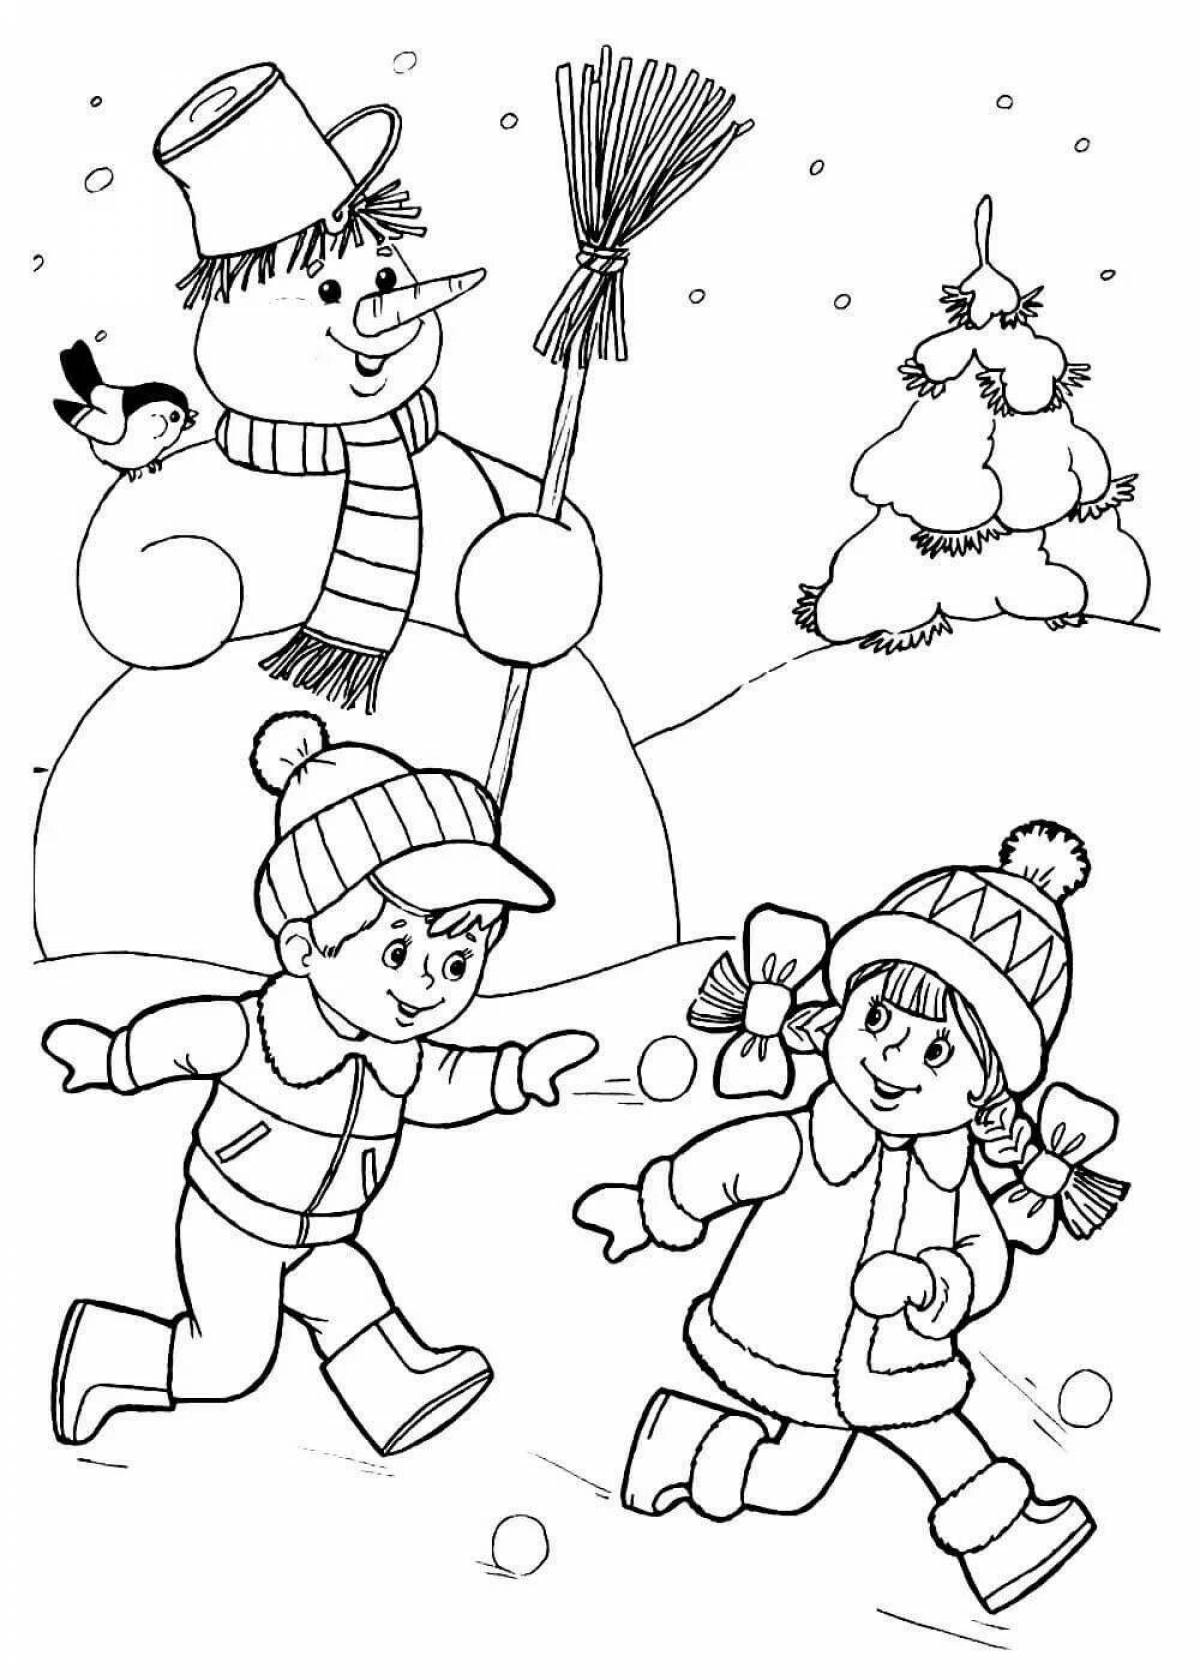 Children playing in winter #11